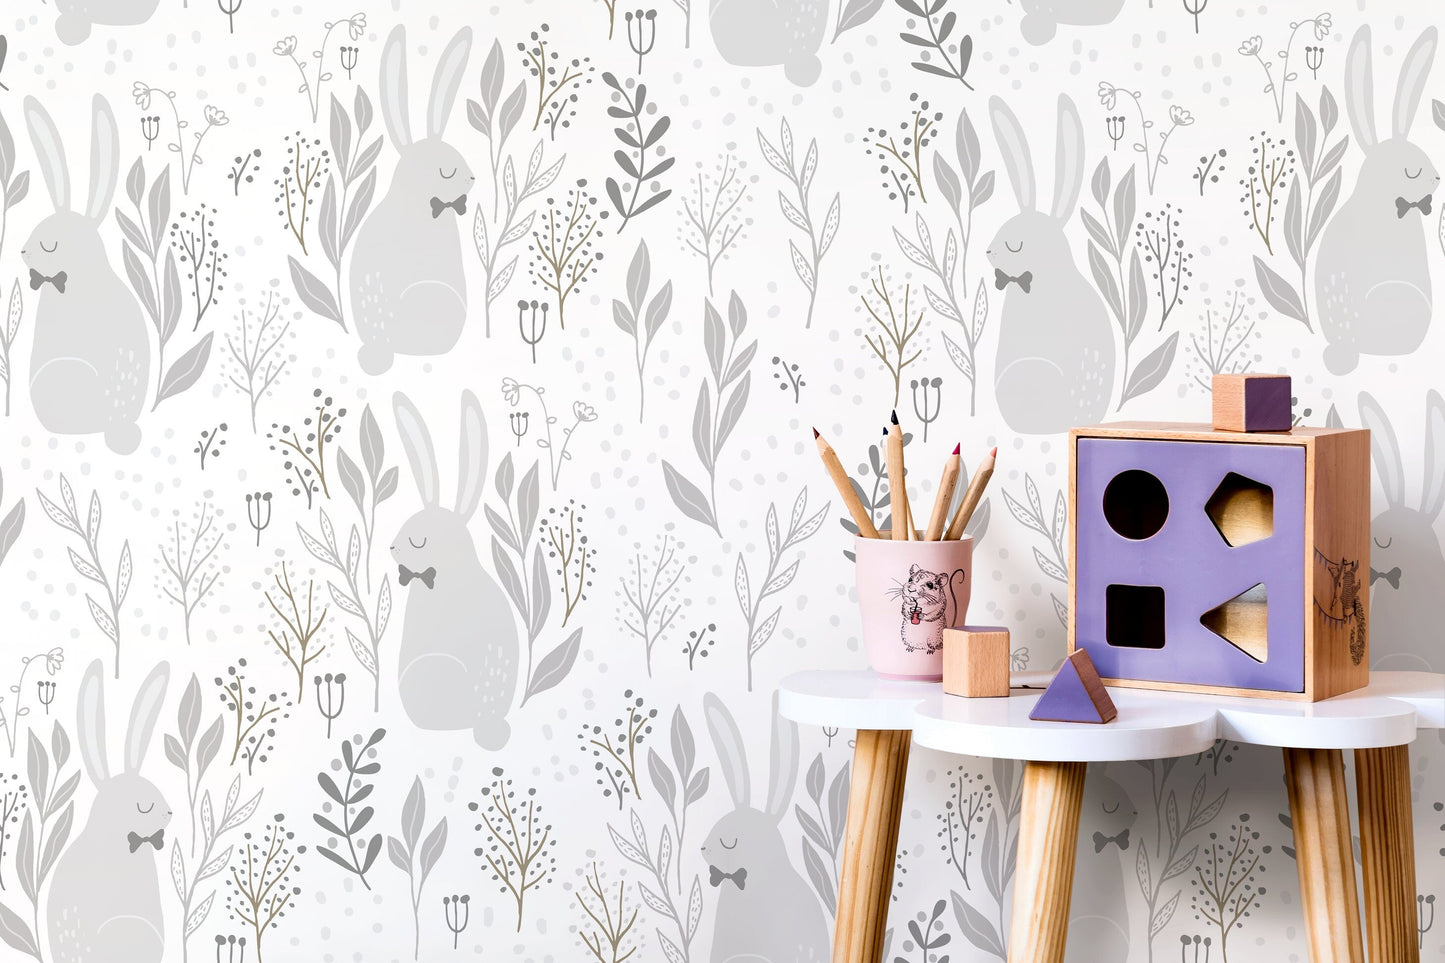 Neutral Bunny Nursery Wallpaper / Peel and Stick Wallpaper Removable Wallpaper Home Decor Wall Art Wall Decor Room Decor - D125